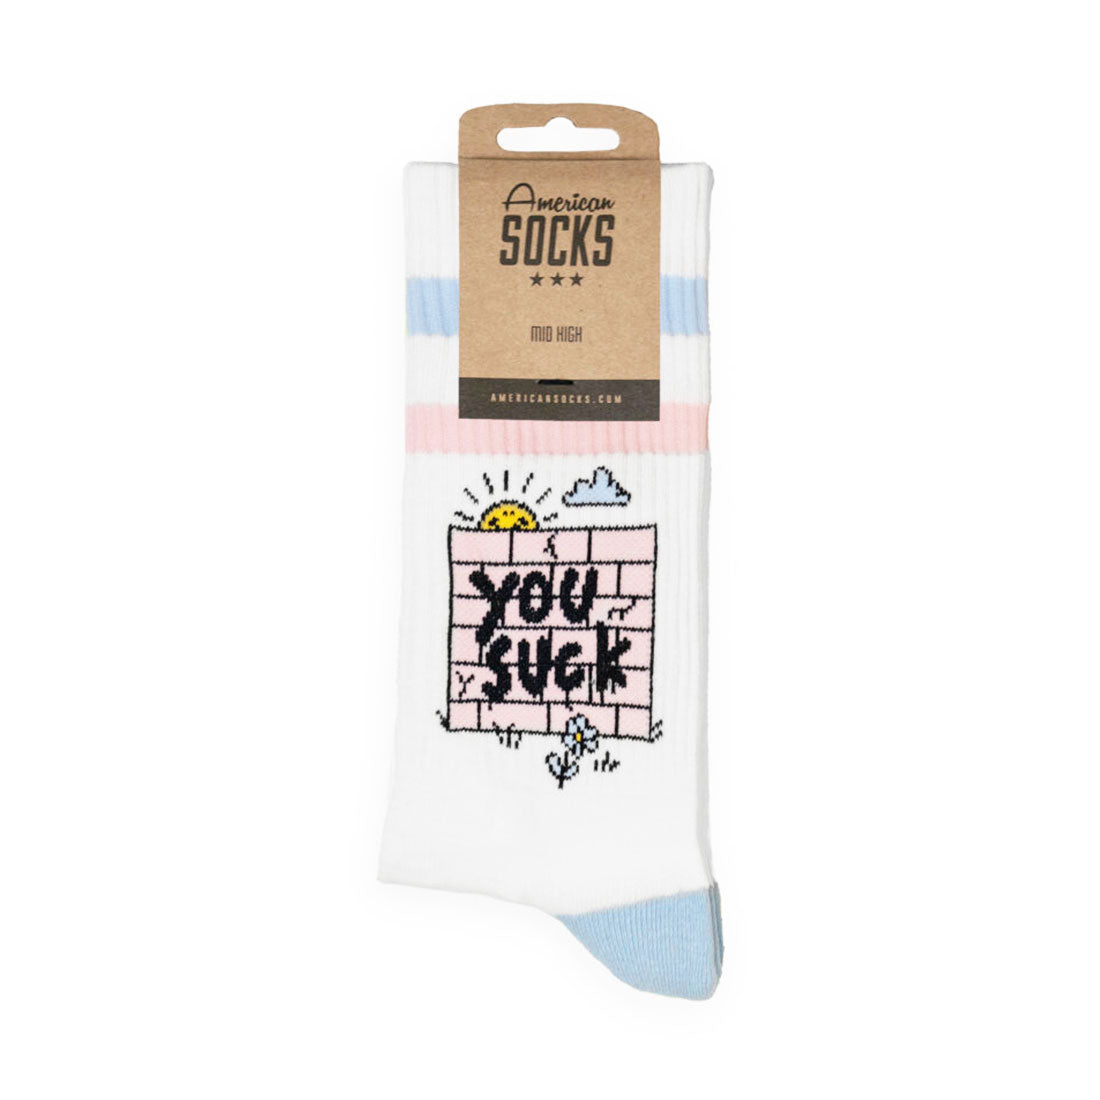 American Socks Design - You Suck Apparel Socks